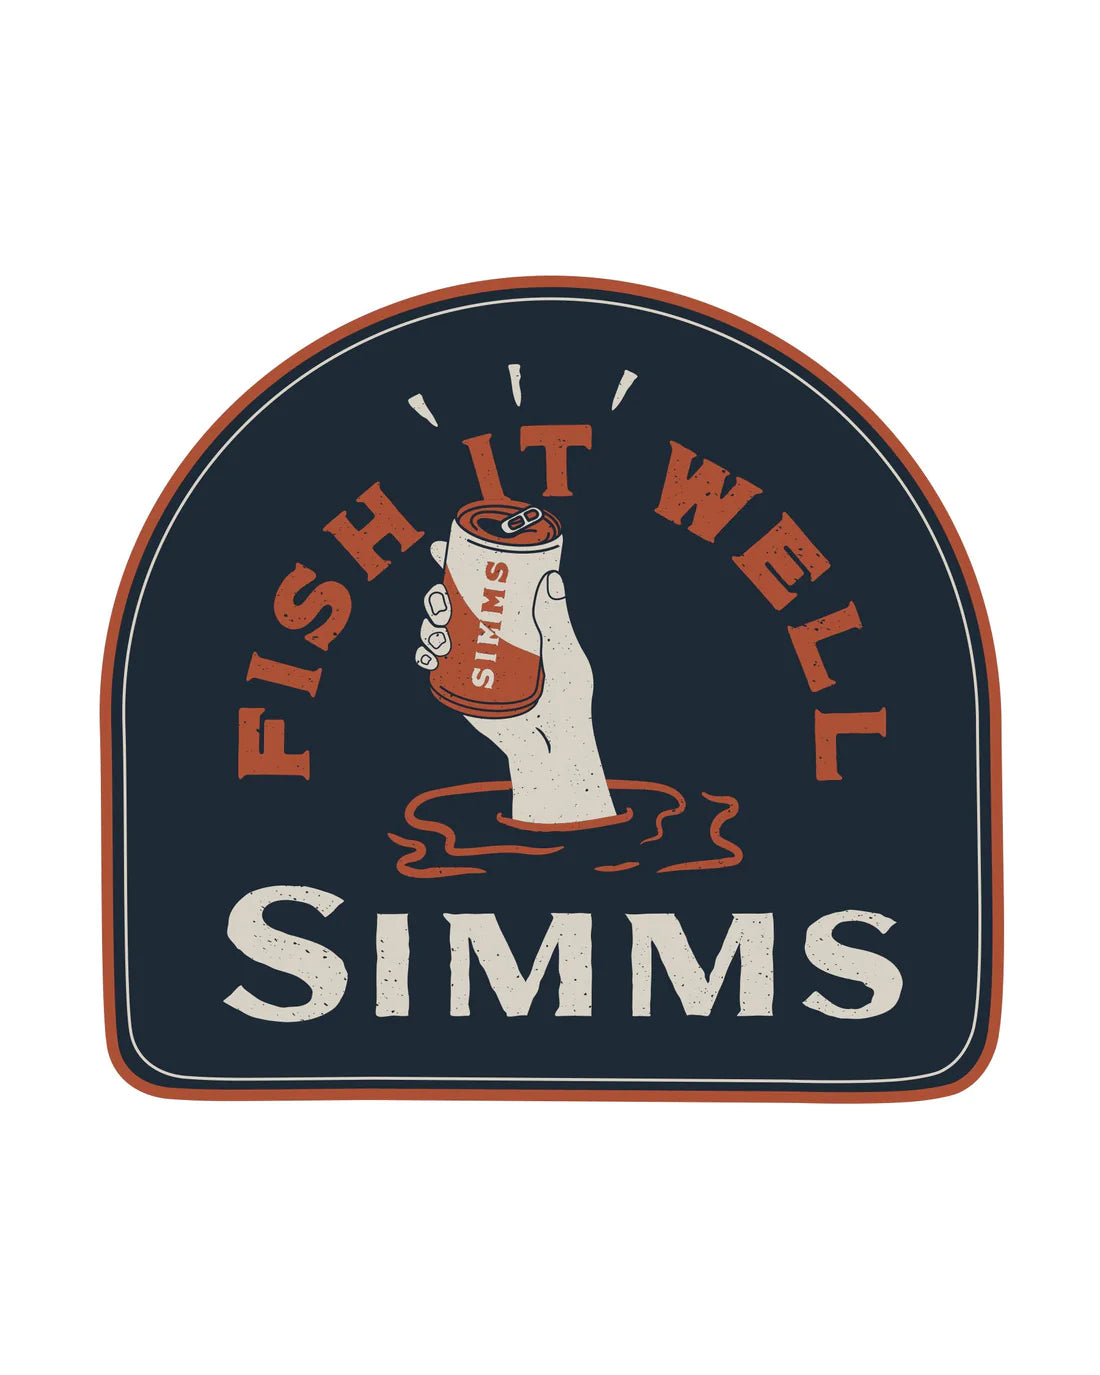 Simms FIW Beer Sticker